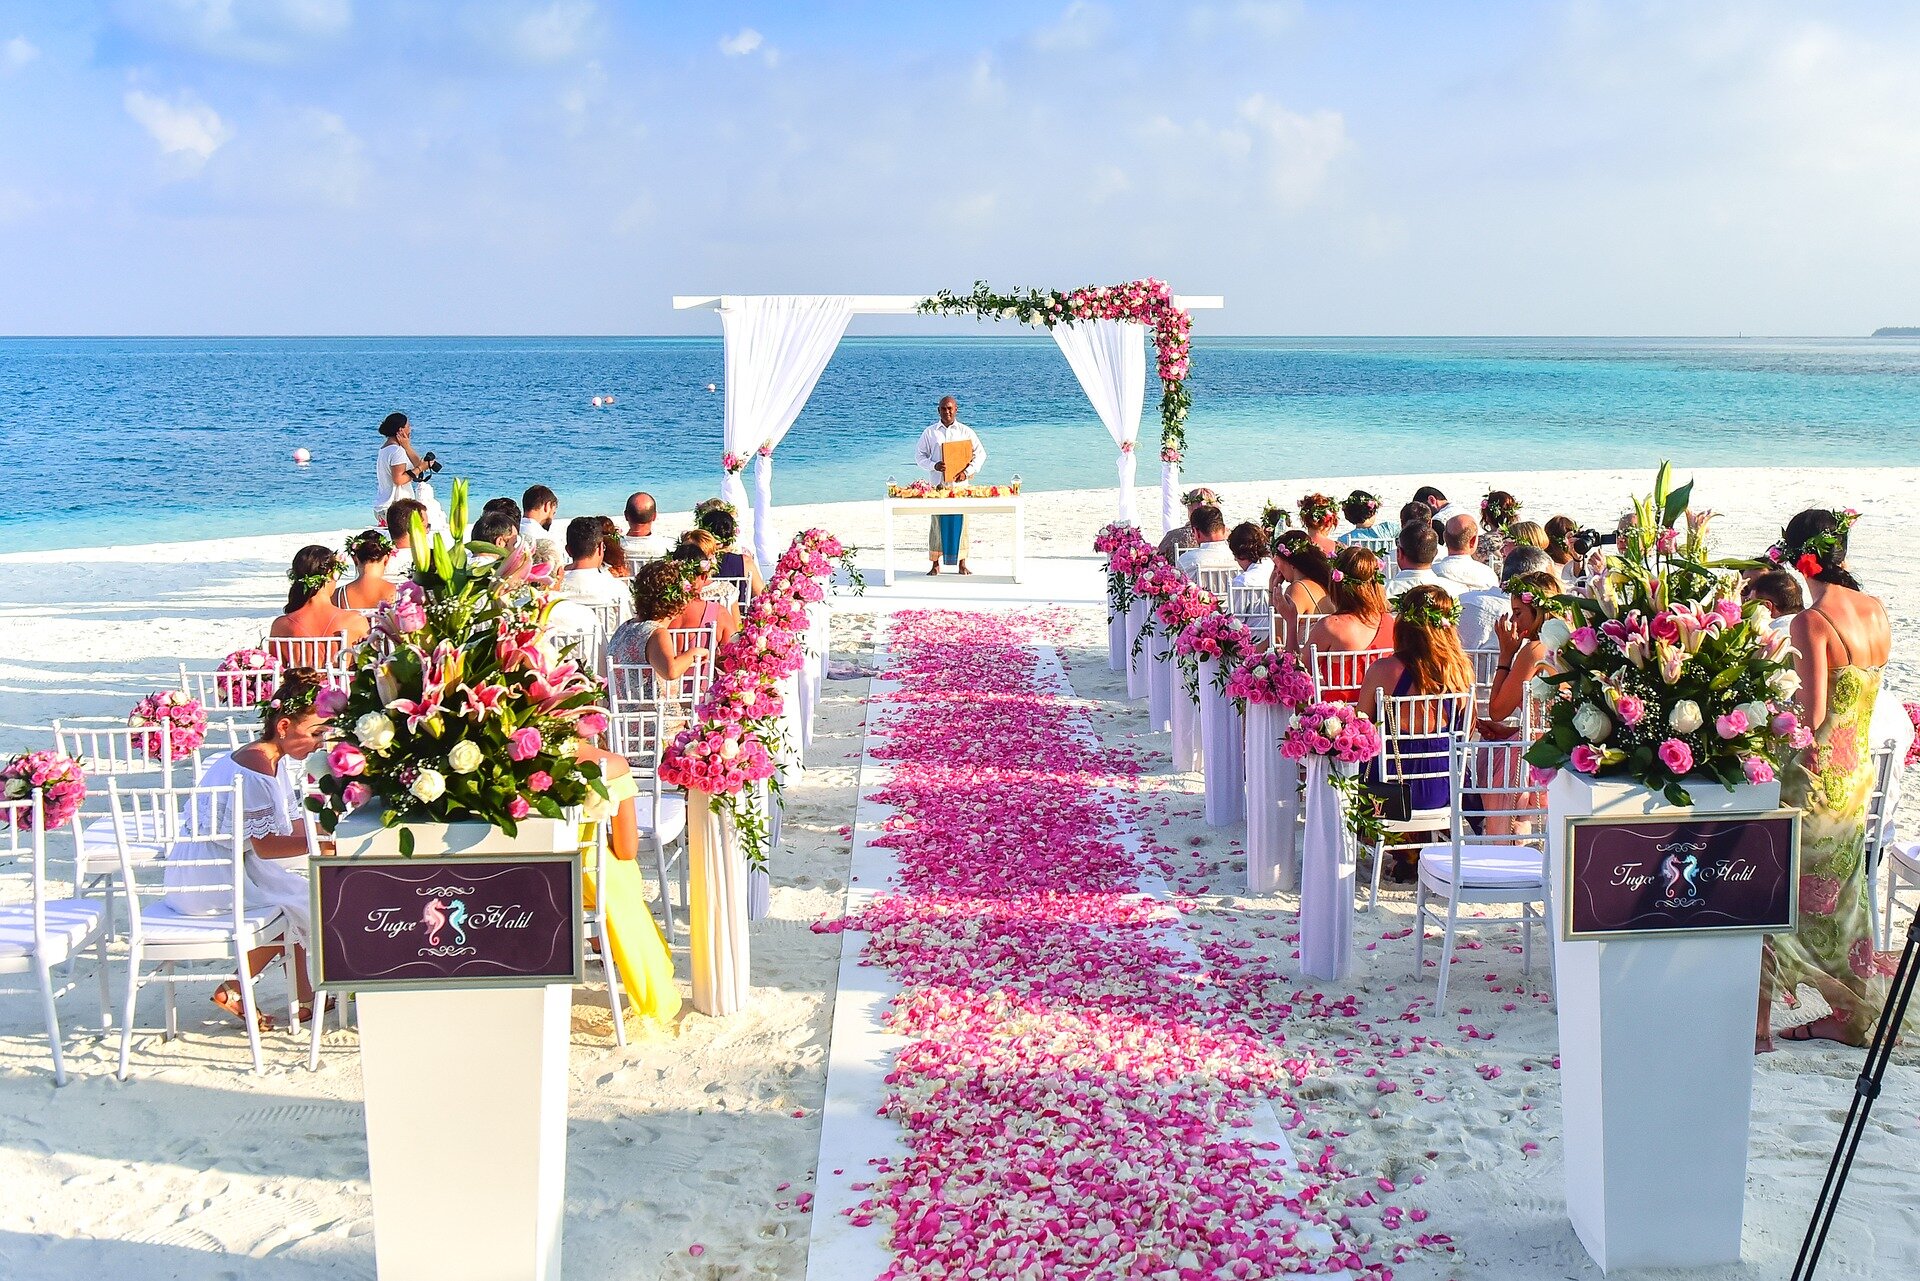   Destination Weddings   The Caribbean &amp; Beyond!    Start Planning Your Destination Wedding &gt;   